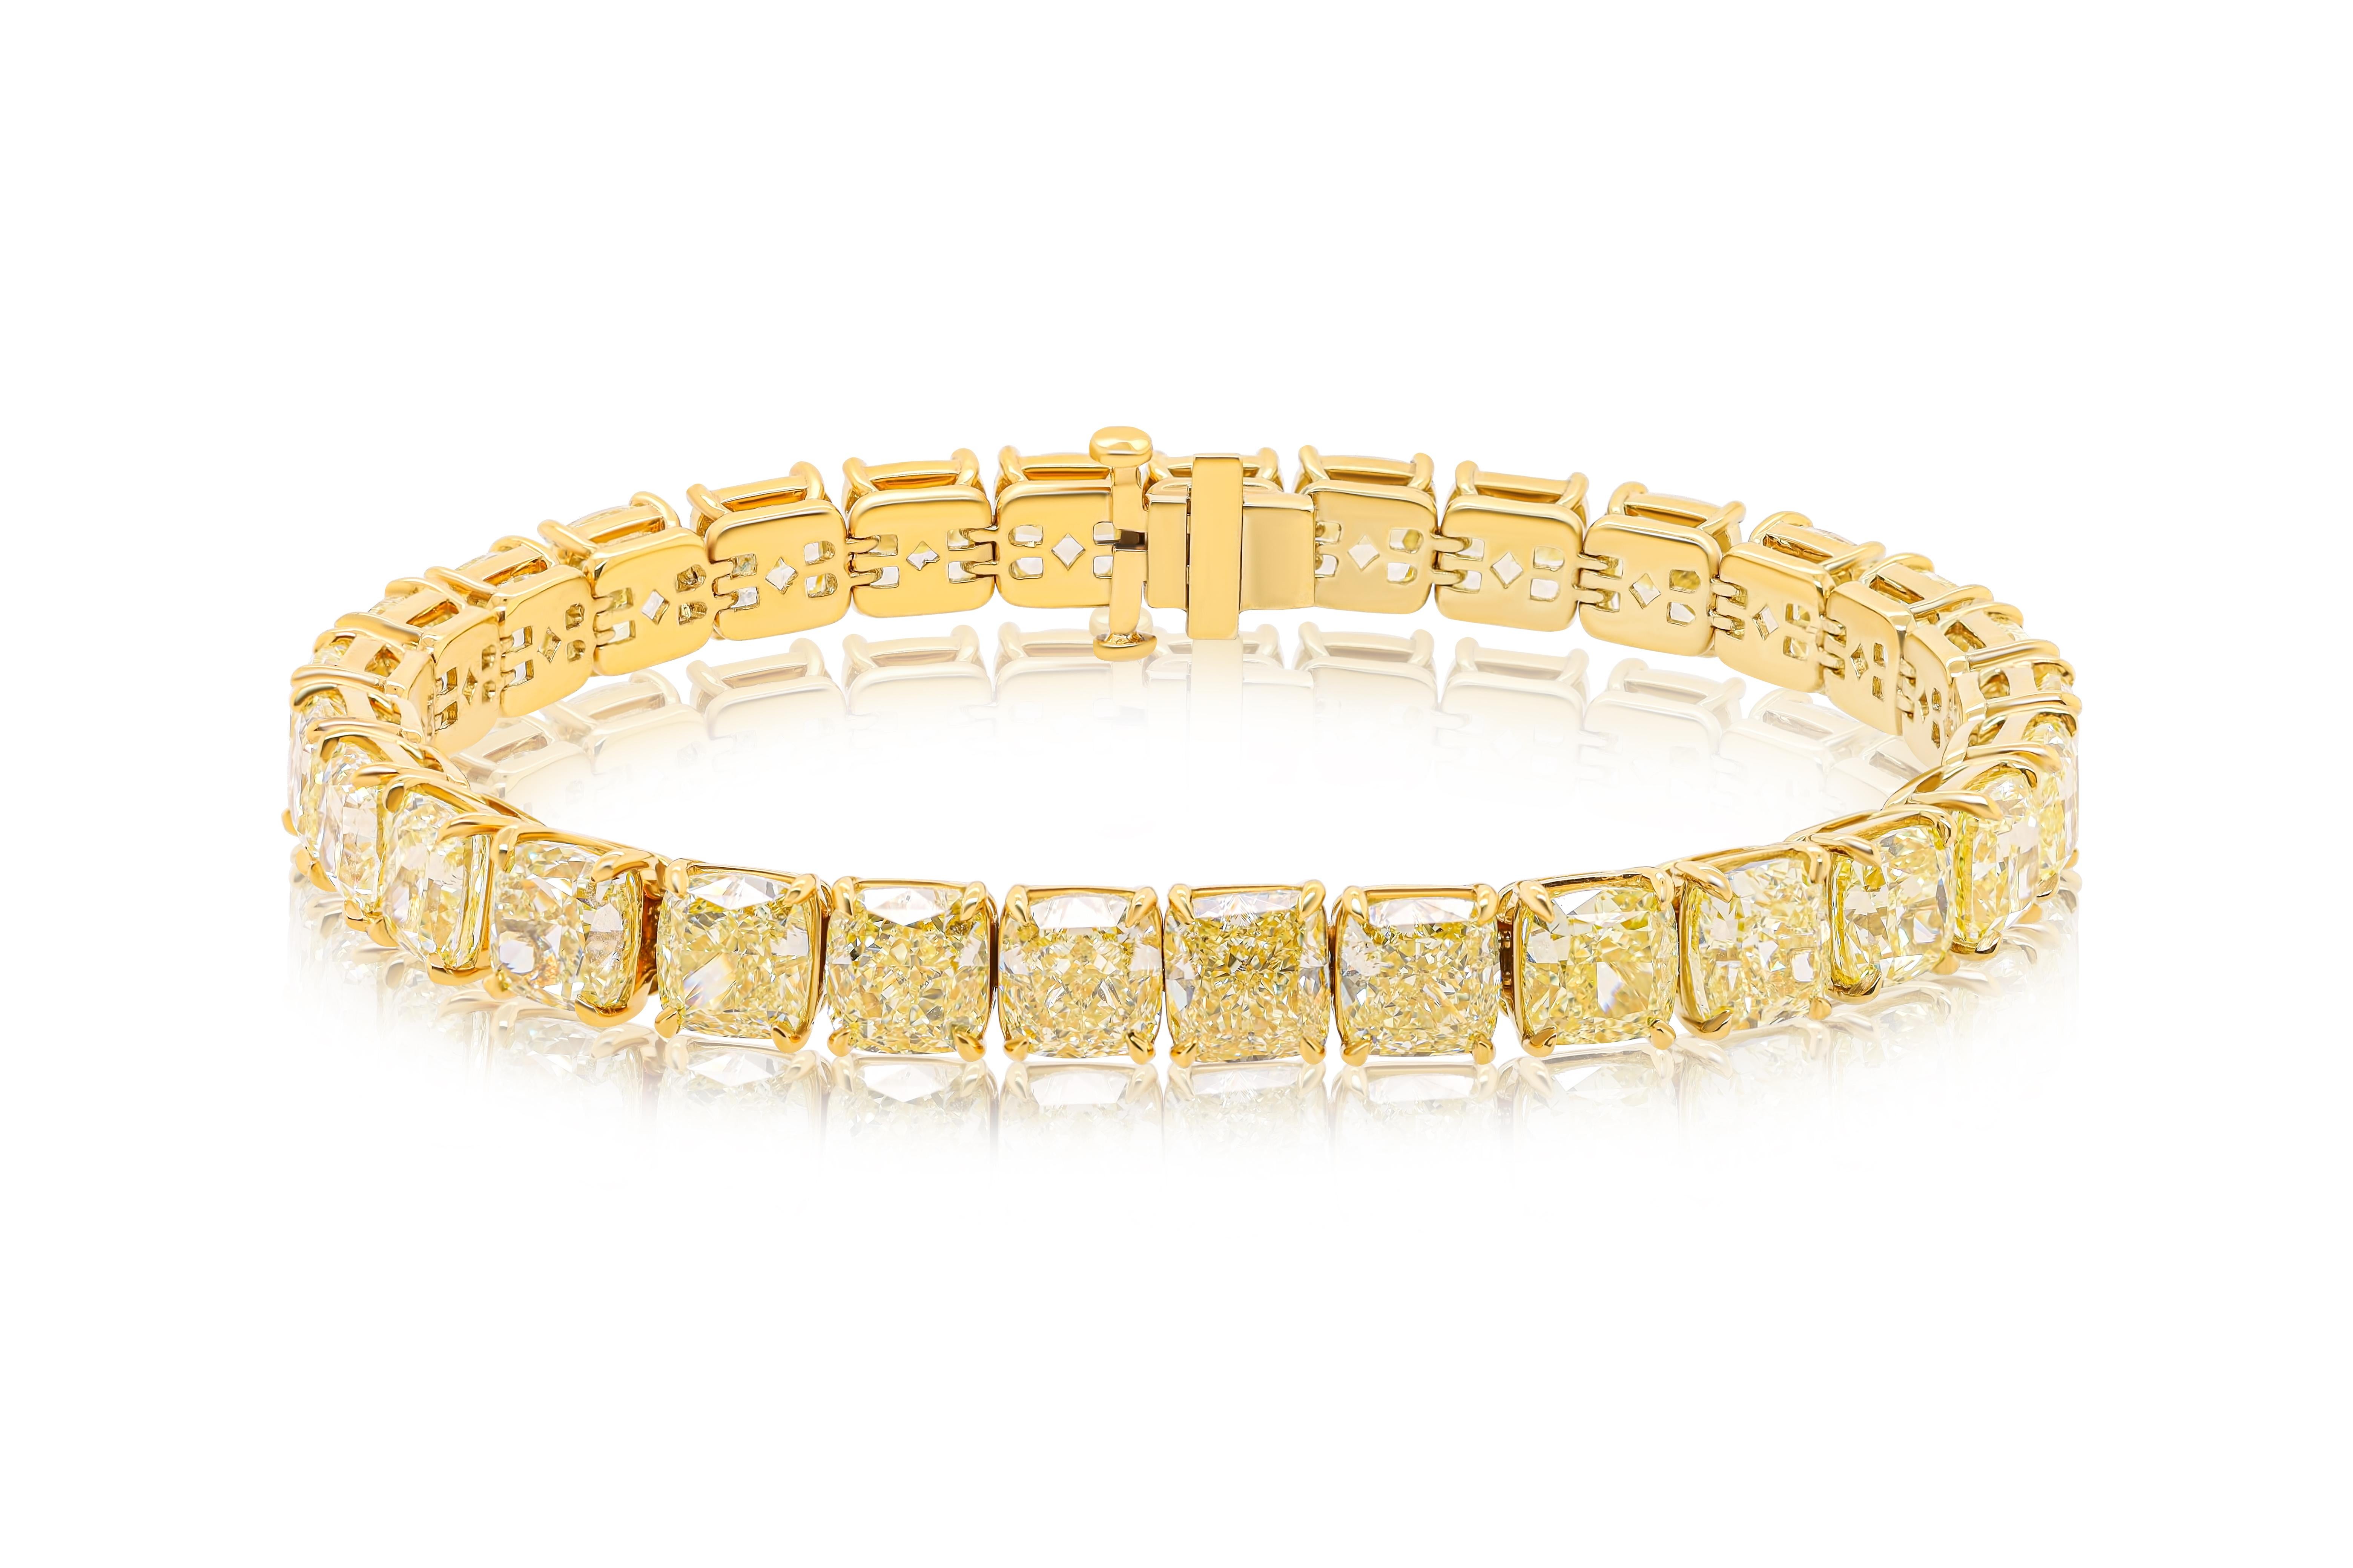 Cushion Cut Diana M. 18 kt Yellow Diamond  Bracelet with 35.07ct Fancy Yellow Diamonds  For Sale